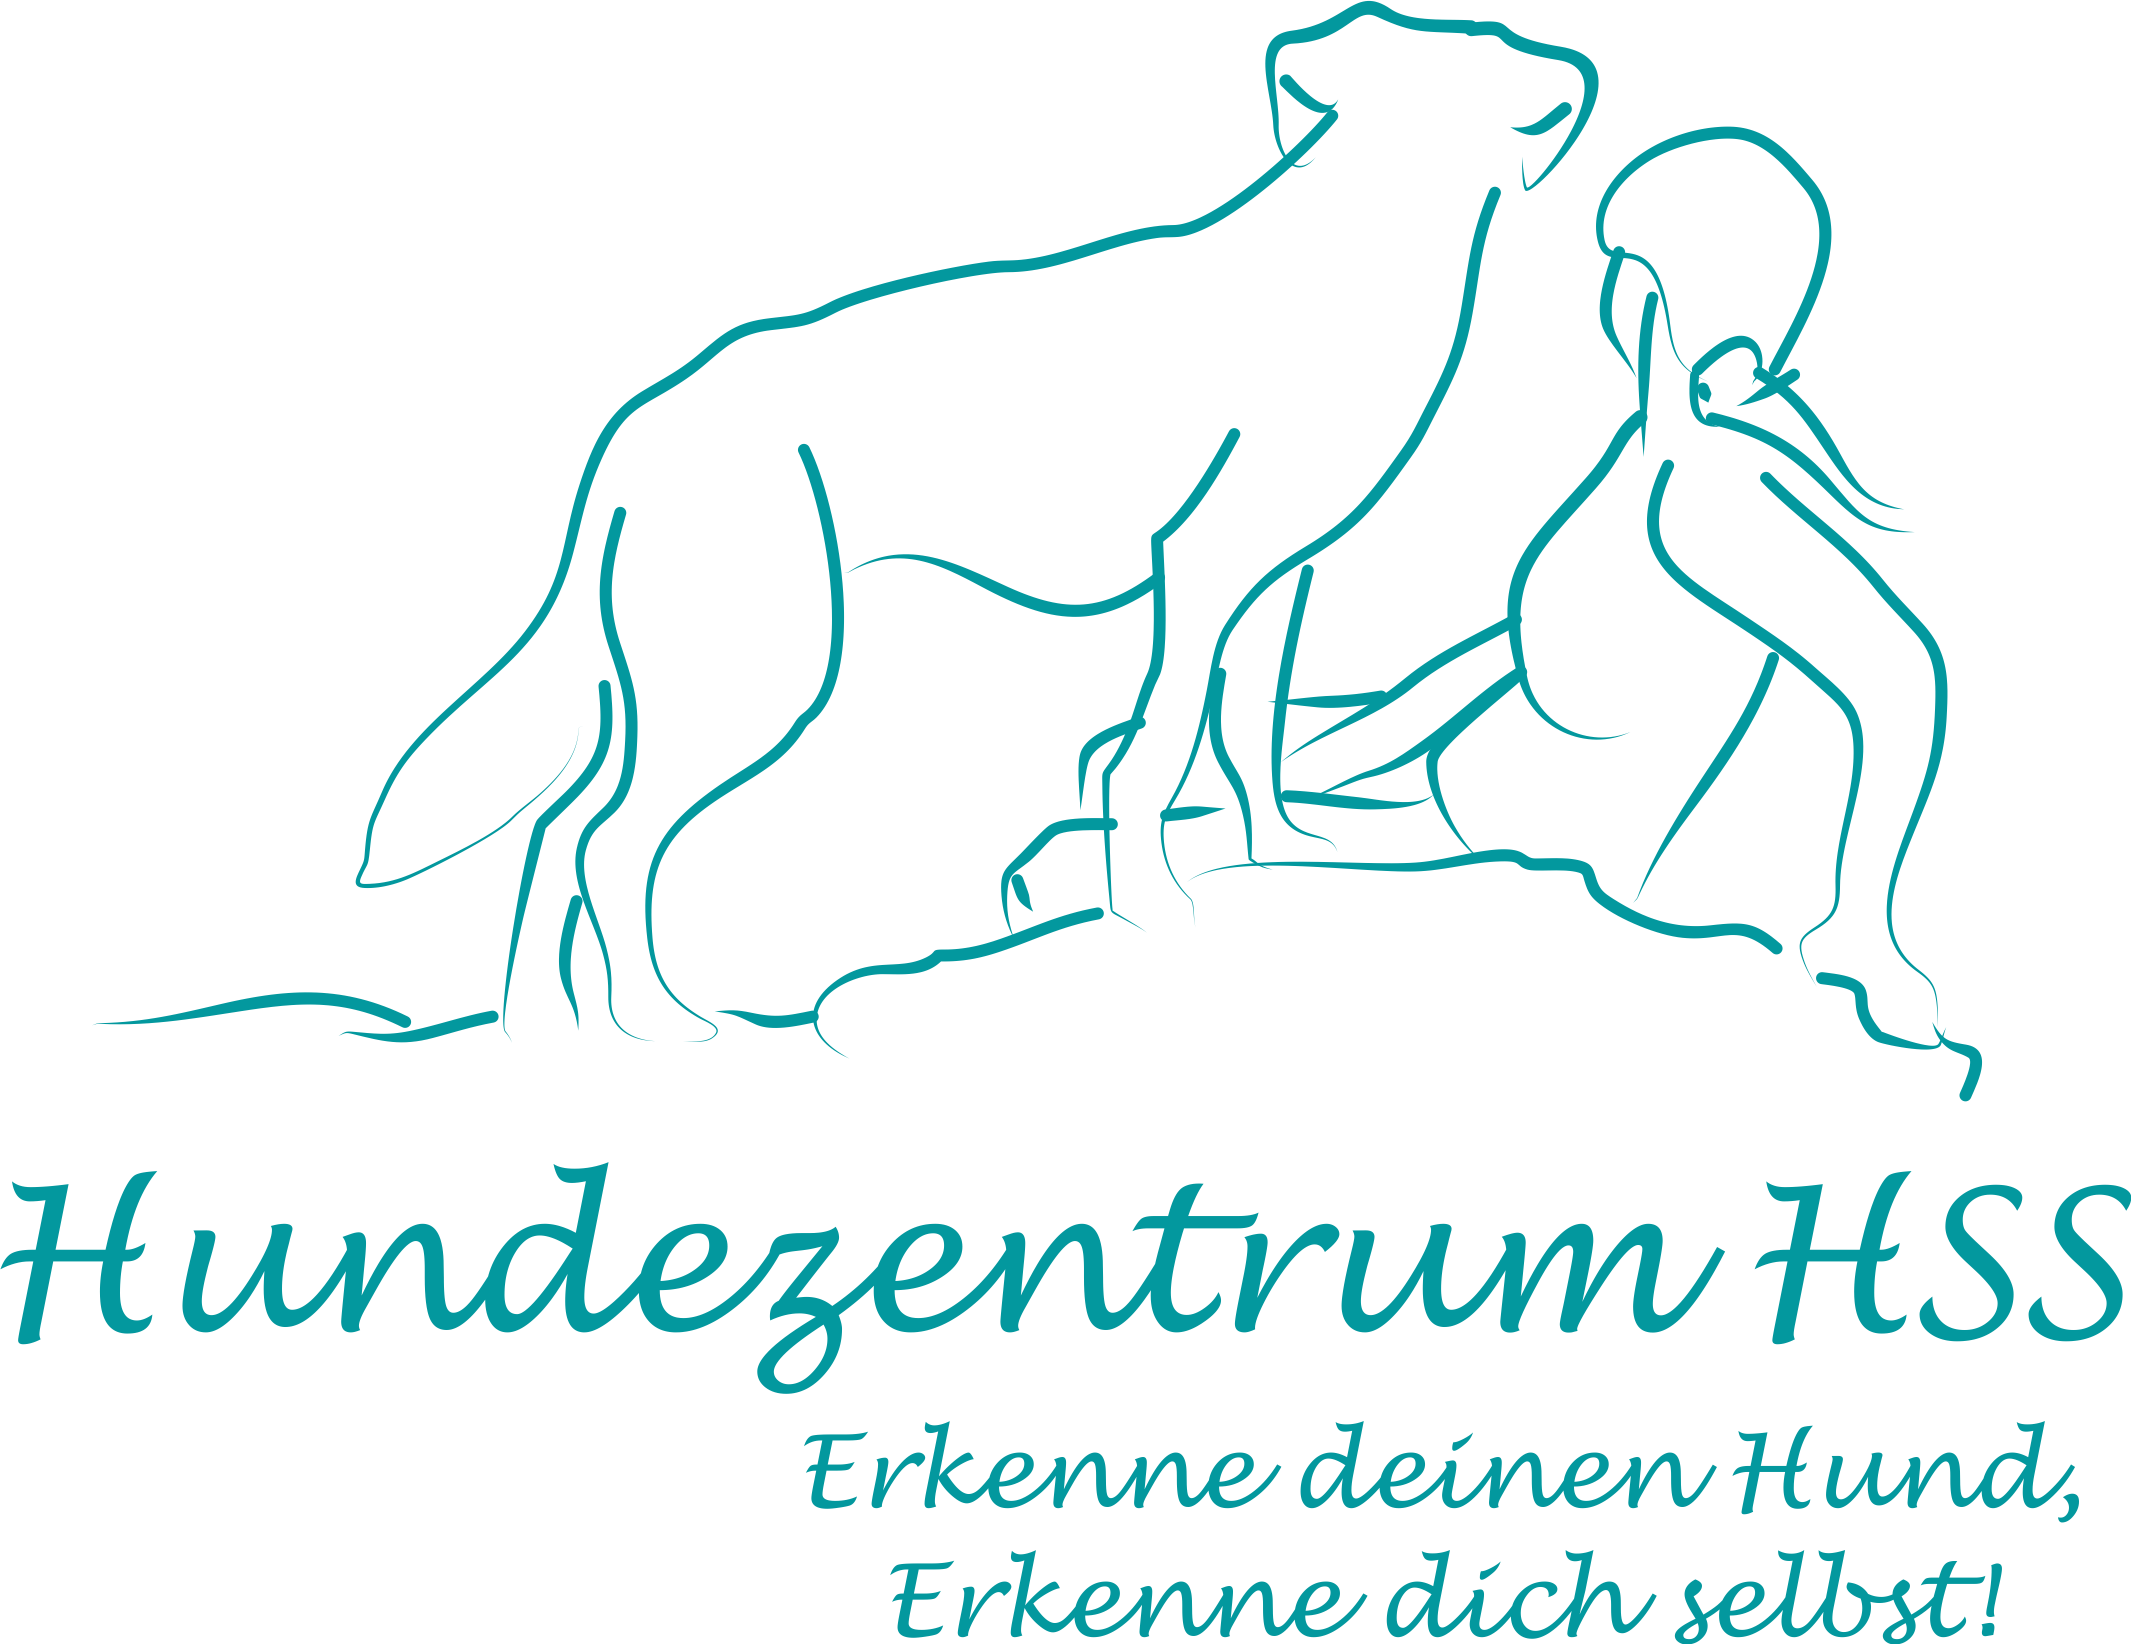 www.hundezentrum-hss.de